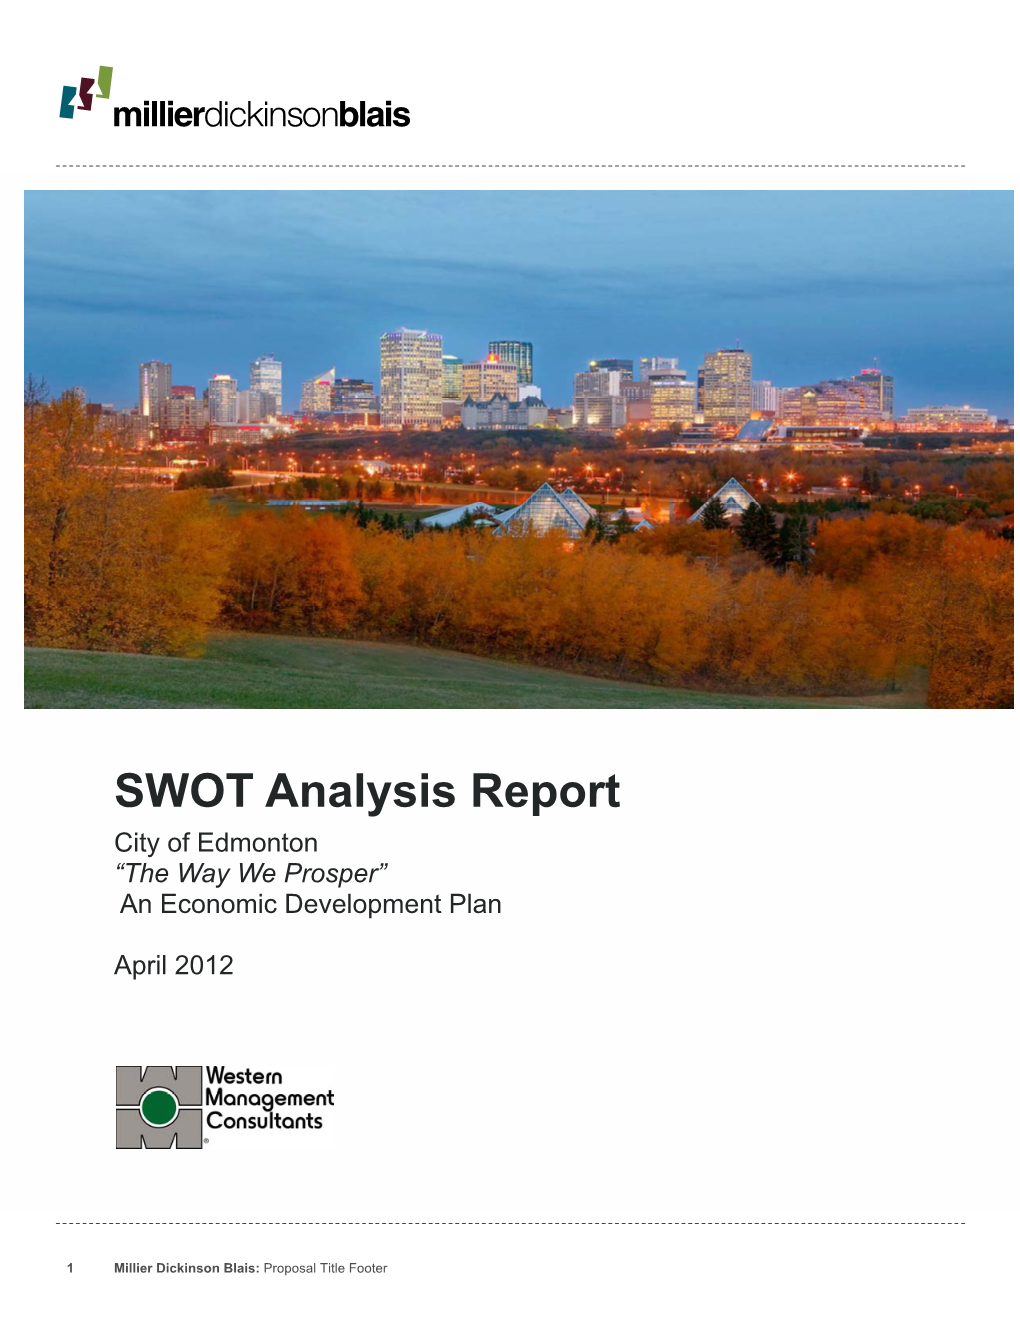 SWOT Analysis Report City of Edmonton “The Way We Prosper” an Economic Development Plan